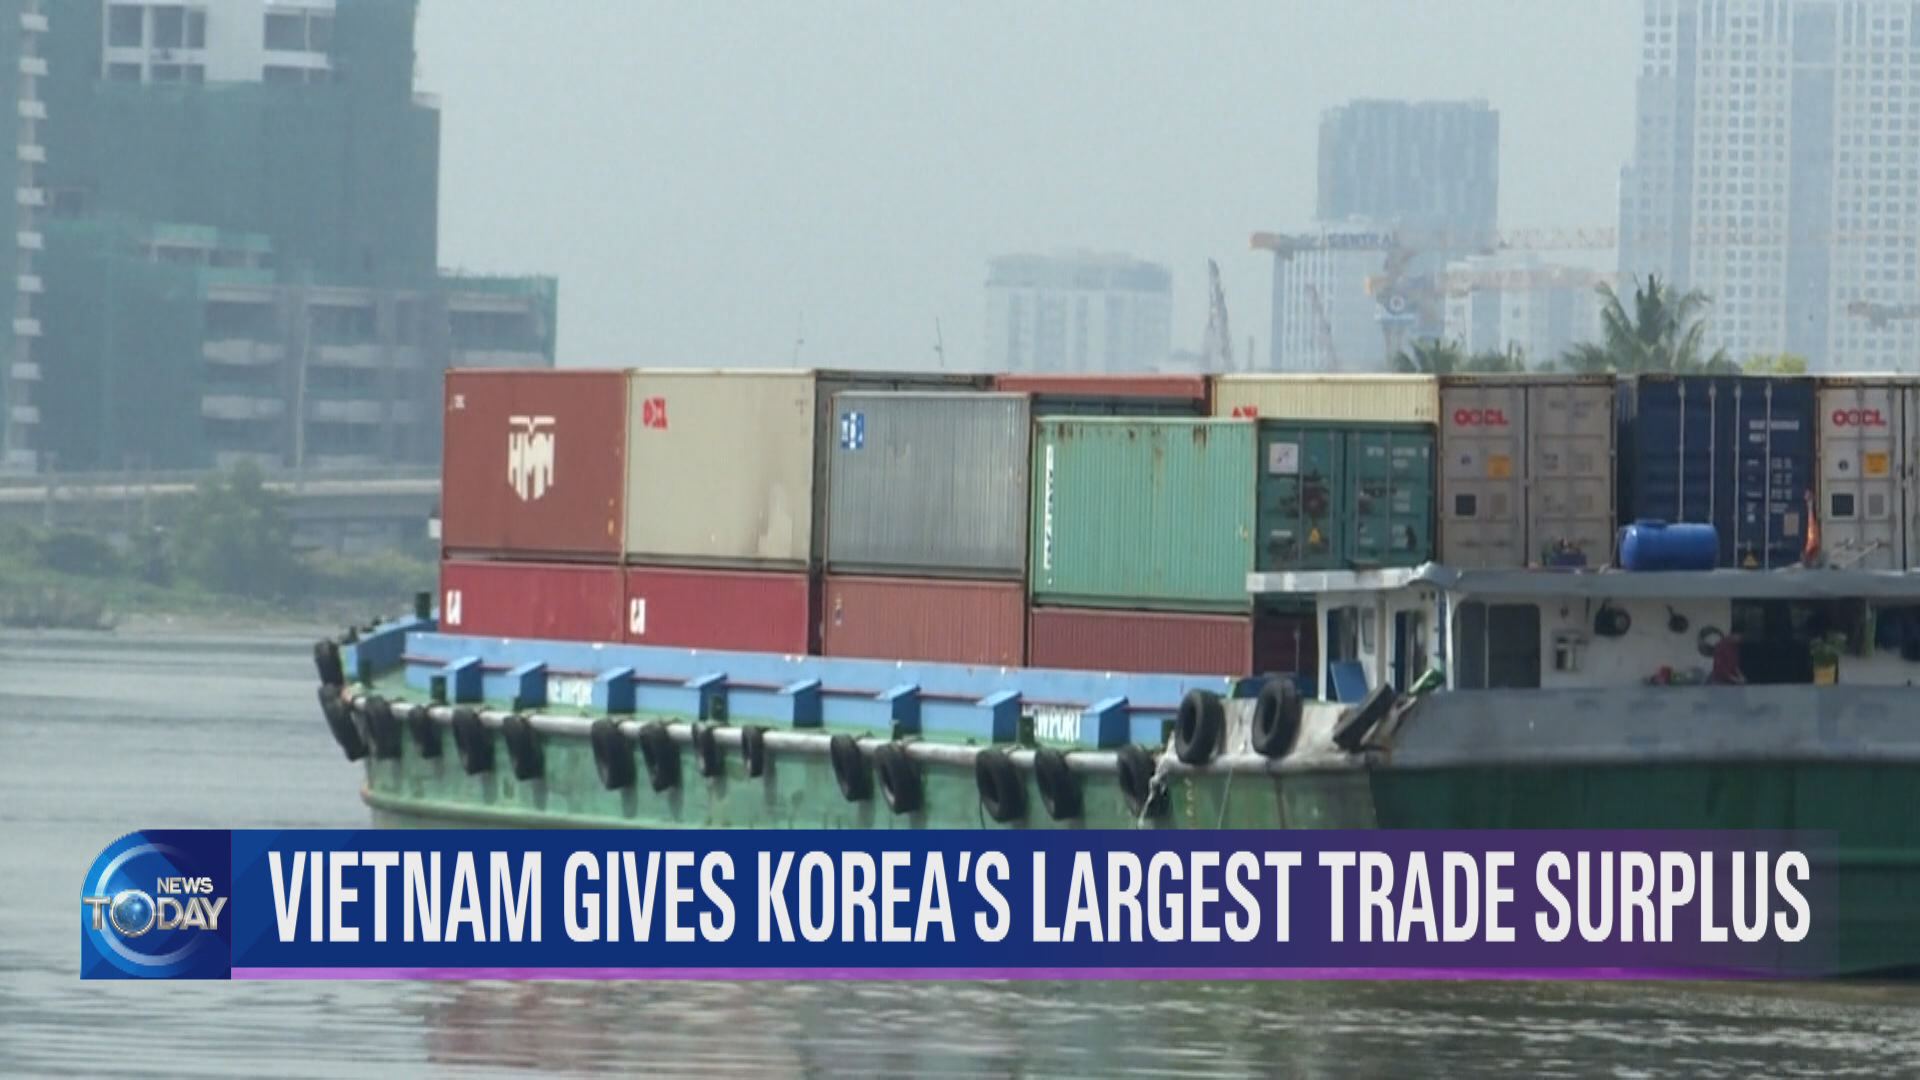 VIETNAM GIVES KOREA’S LARGEST TRADE SURPLUS